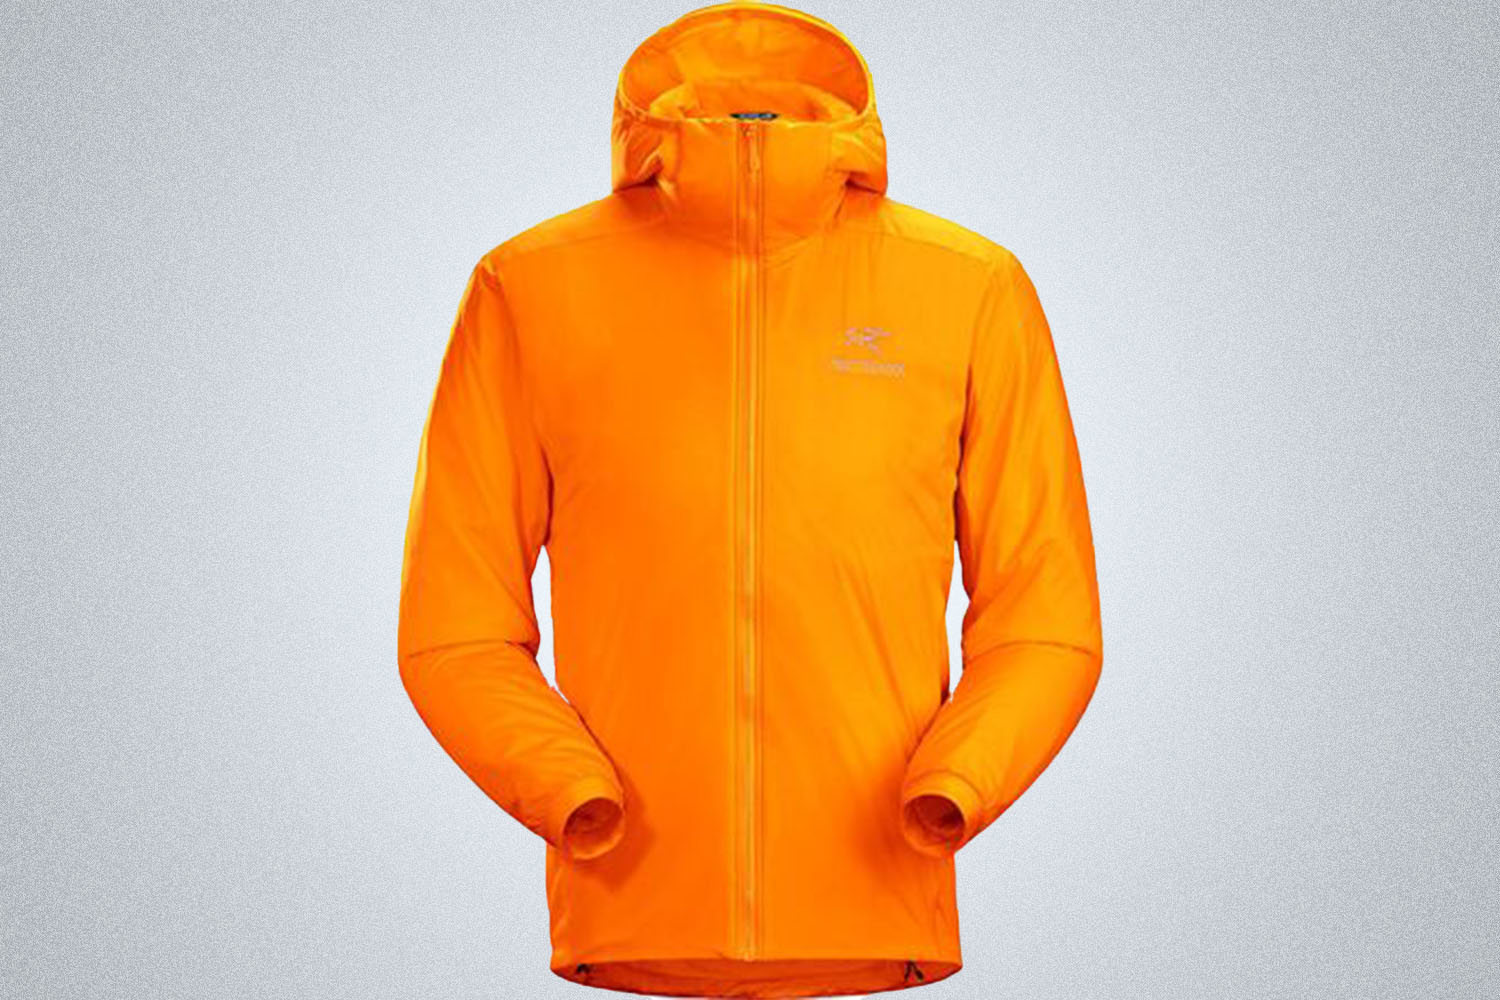 A bright orange hoodie